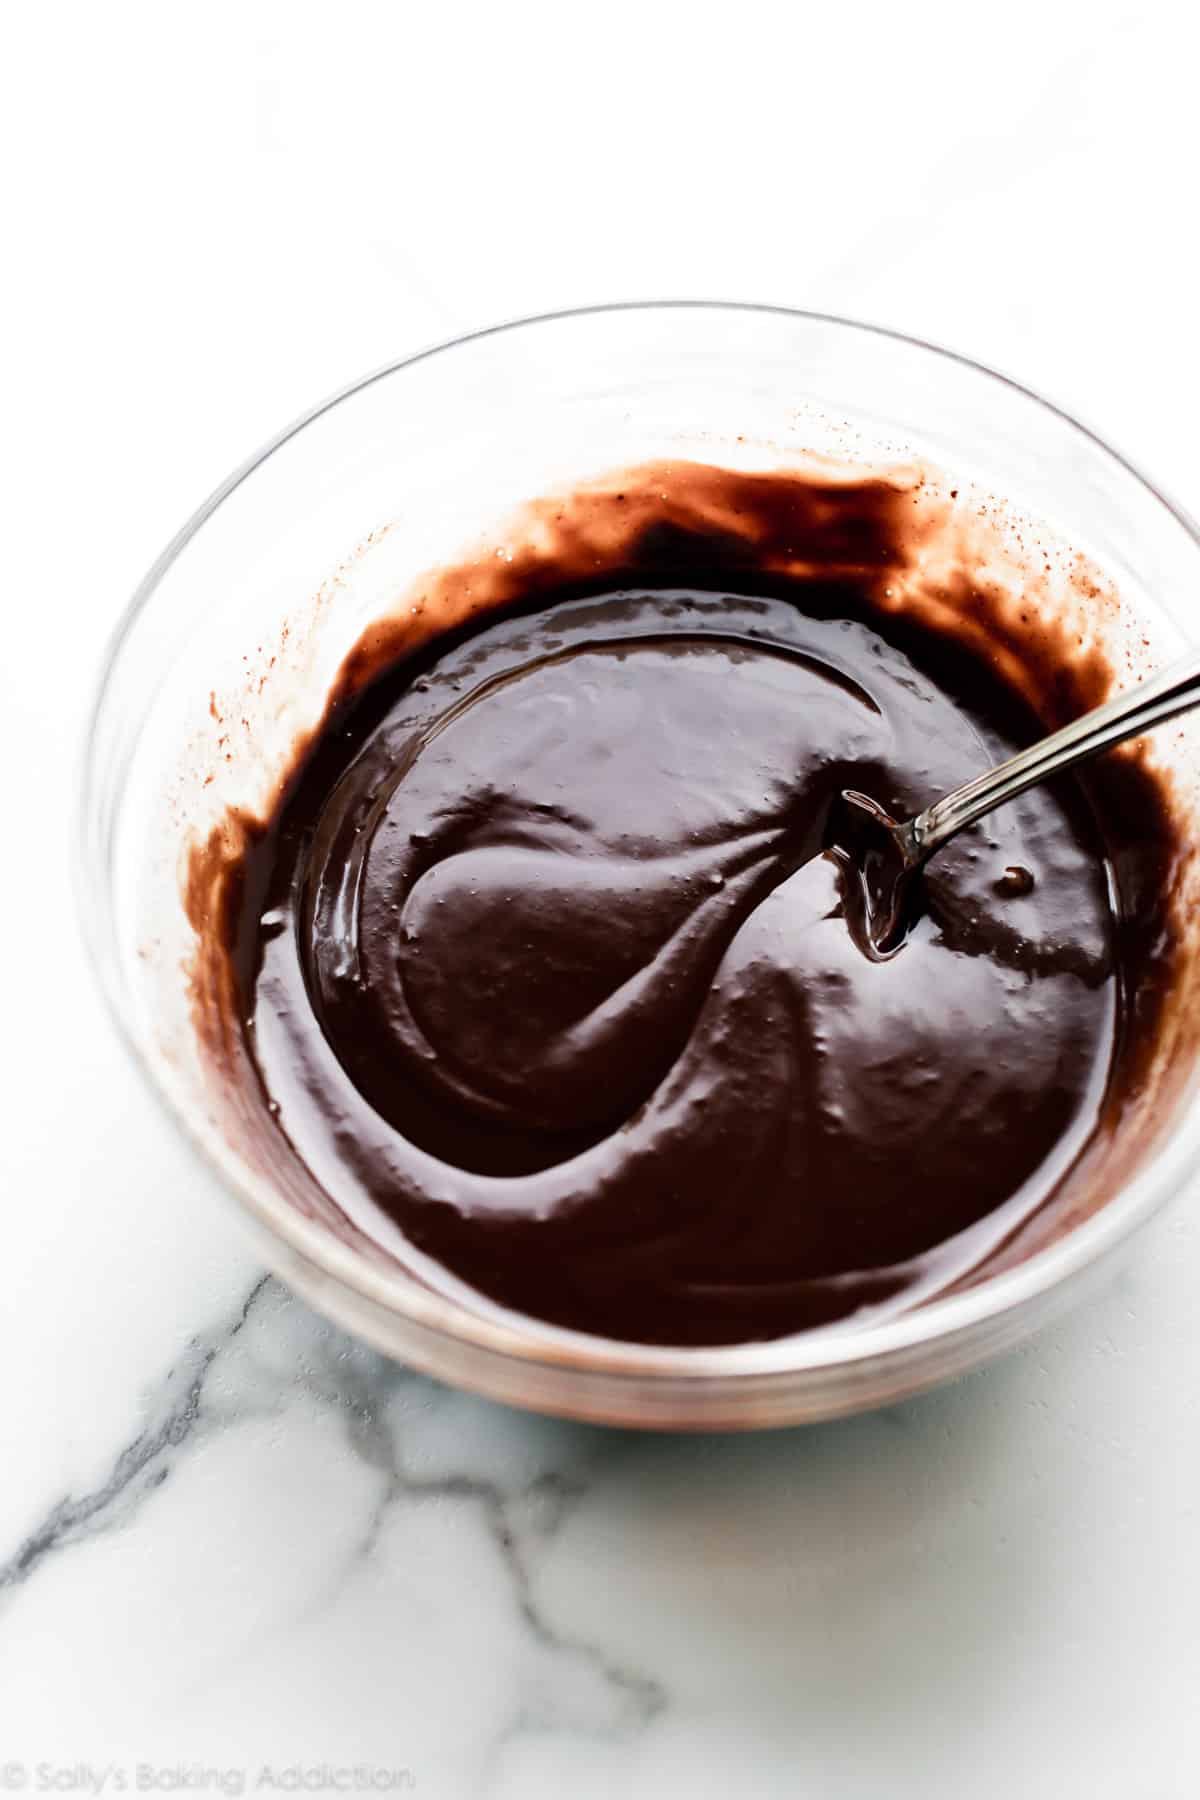 How to Make Chocolate Ganache (Easy Recipe) - Sally's Baking Addiction